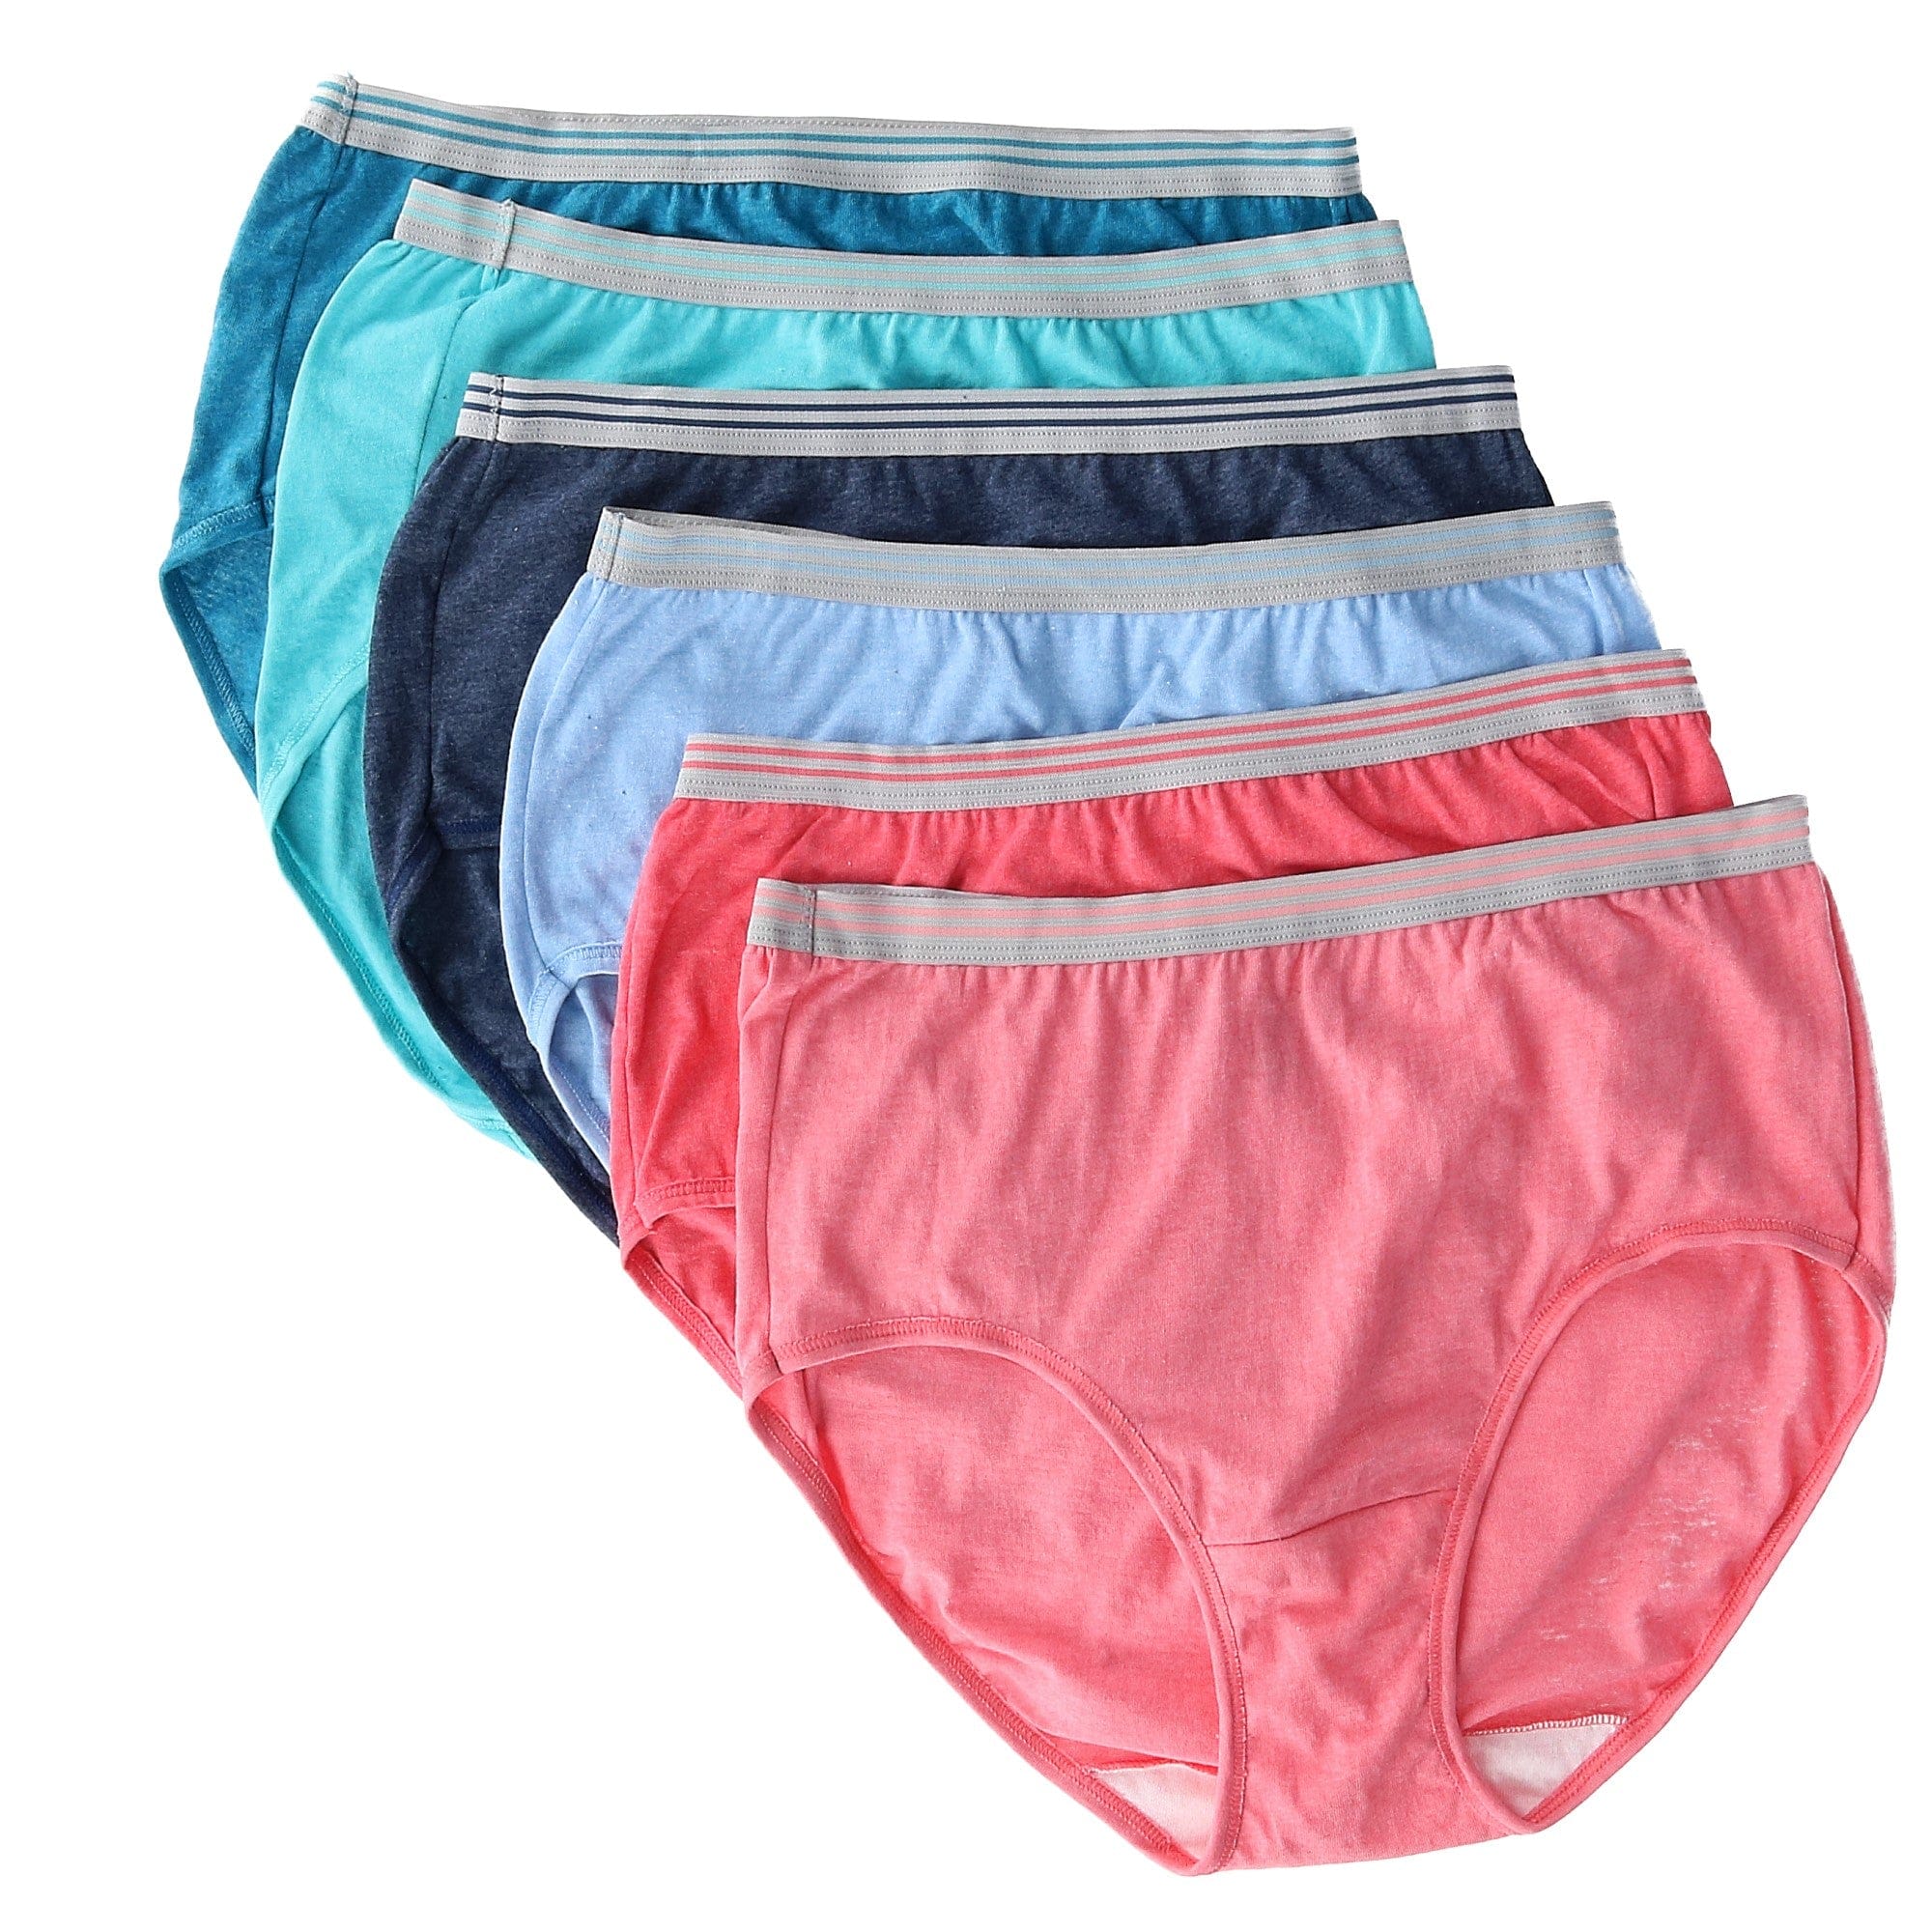 Women's Heather Brief Underwear (6 Pair Pack) by Fruit of the Loom ...